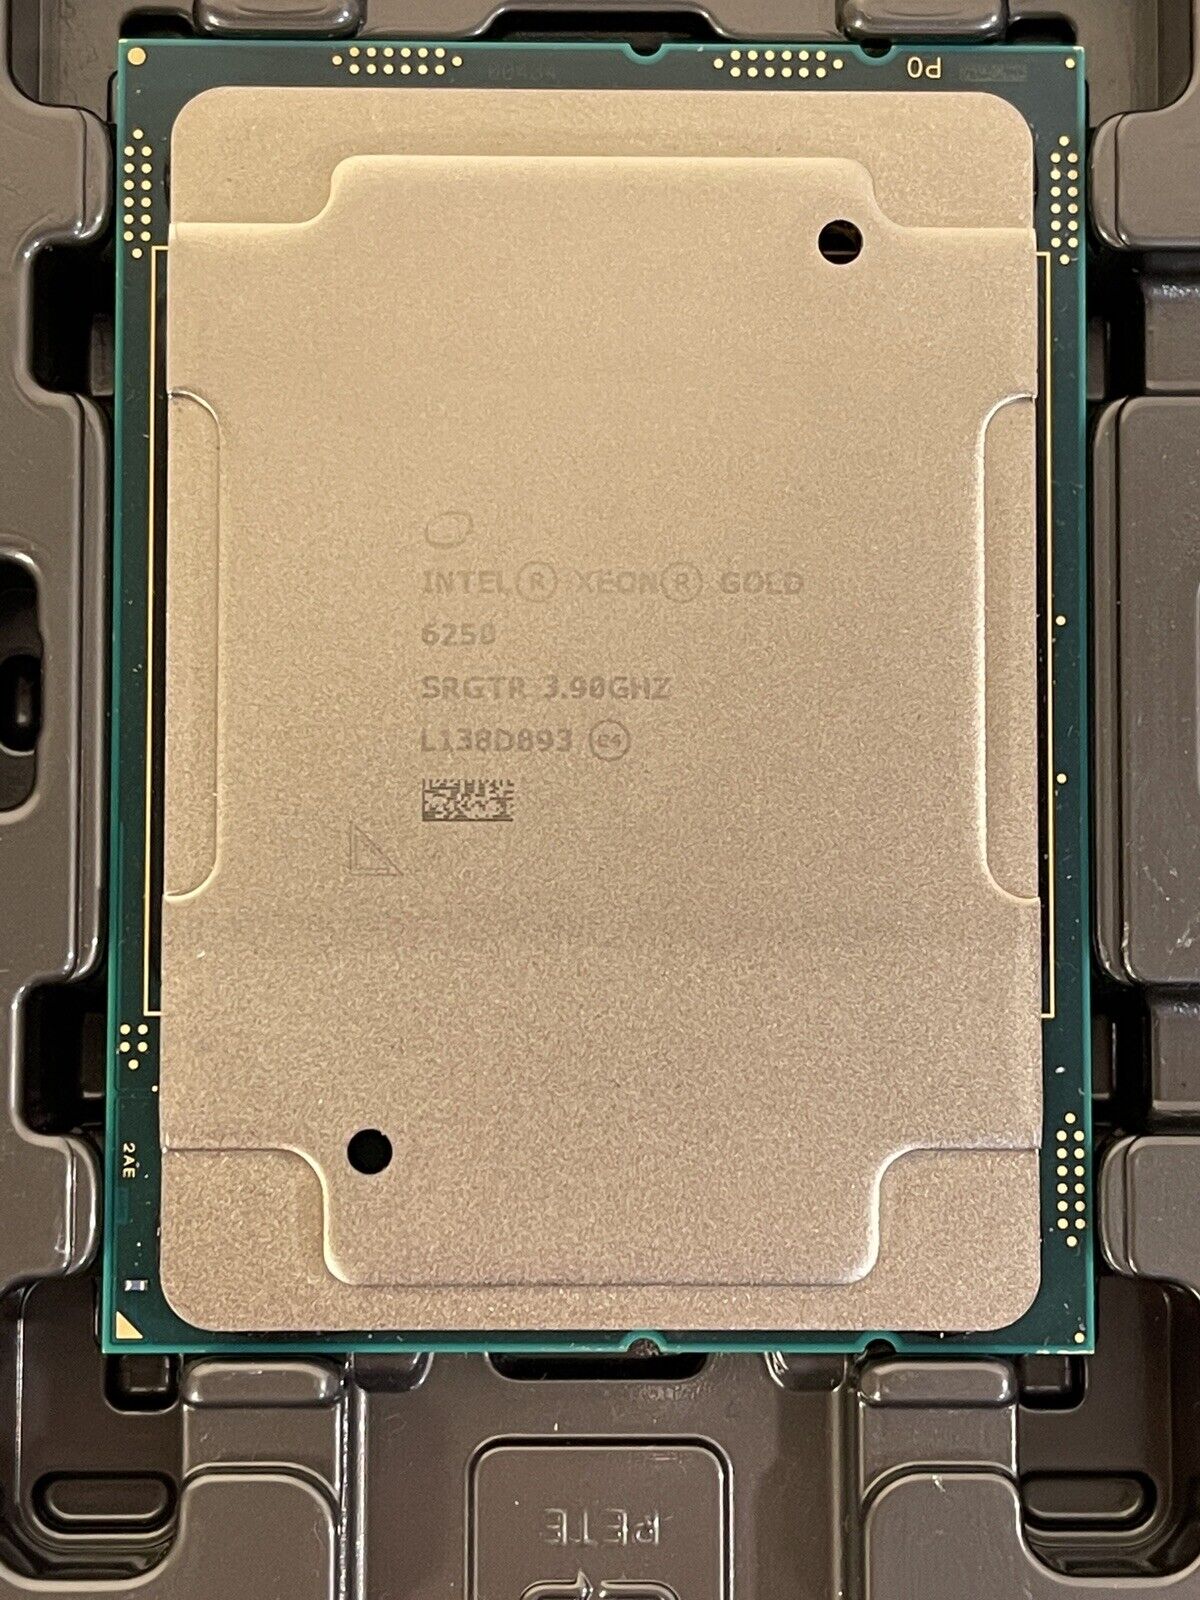 Intel Xeon Gold 6250 3.9GHz 8 Core 35.75M SRGTR FCLGA3647 CPU Processor 185W.